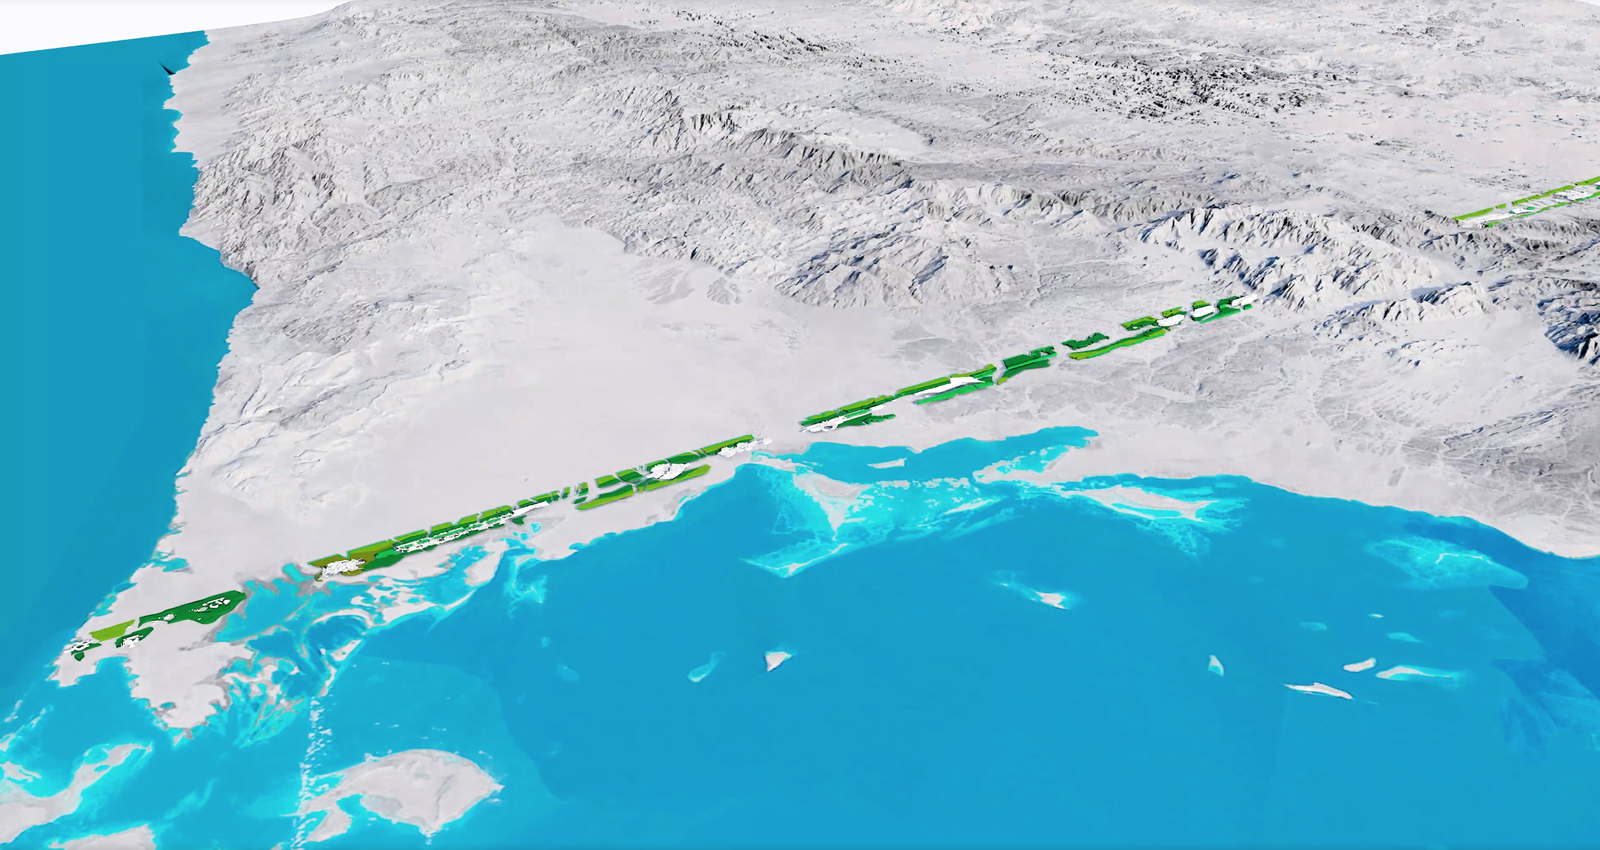 More information about "ΝΕΟΜ: Η πρώτη γραμμική πόλη στον κόσμο στη Σαουδική Αραβία"